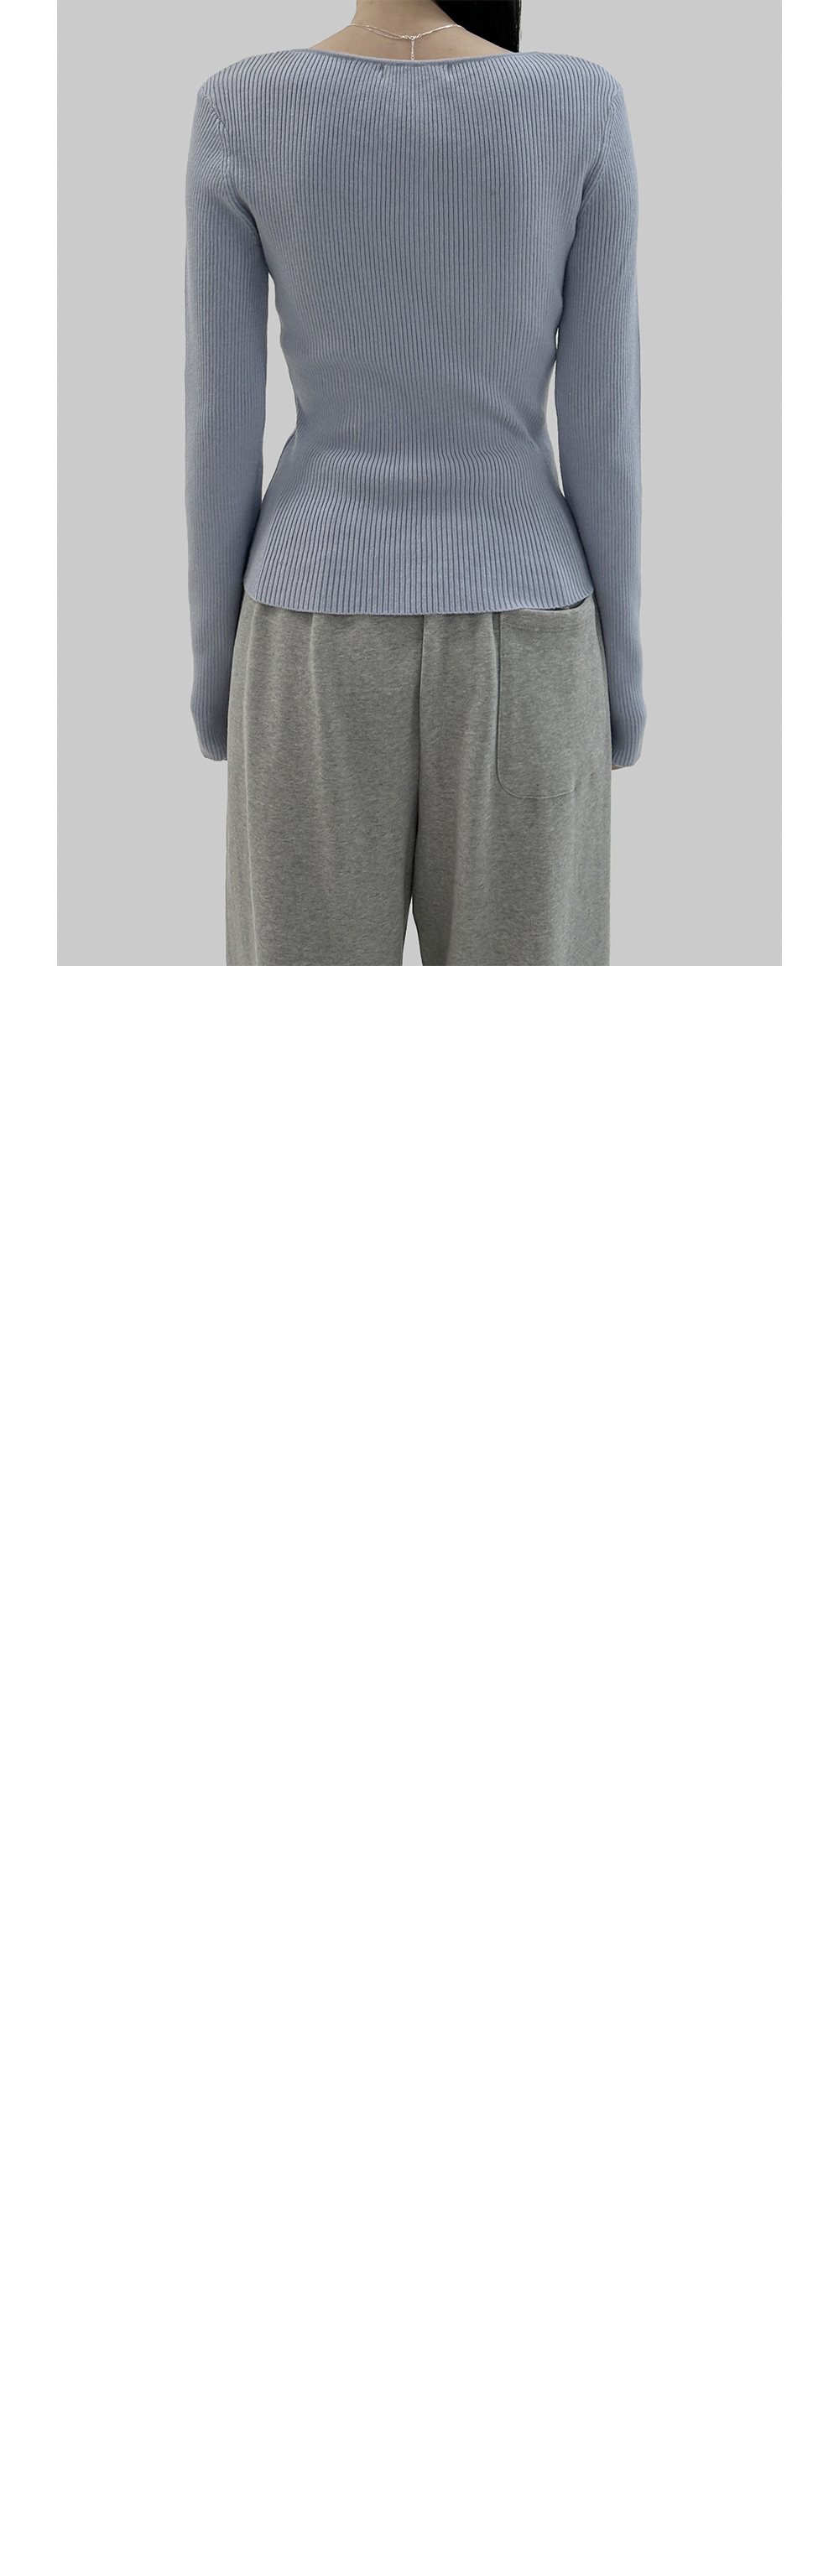 suspenders skirt/pants model image-S2L2